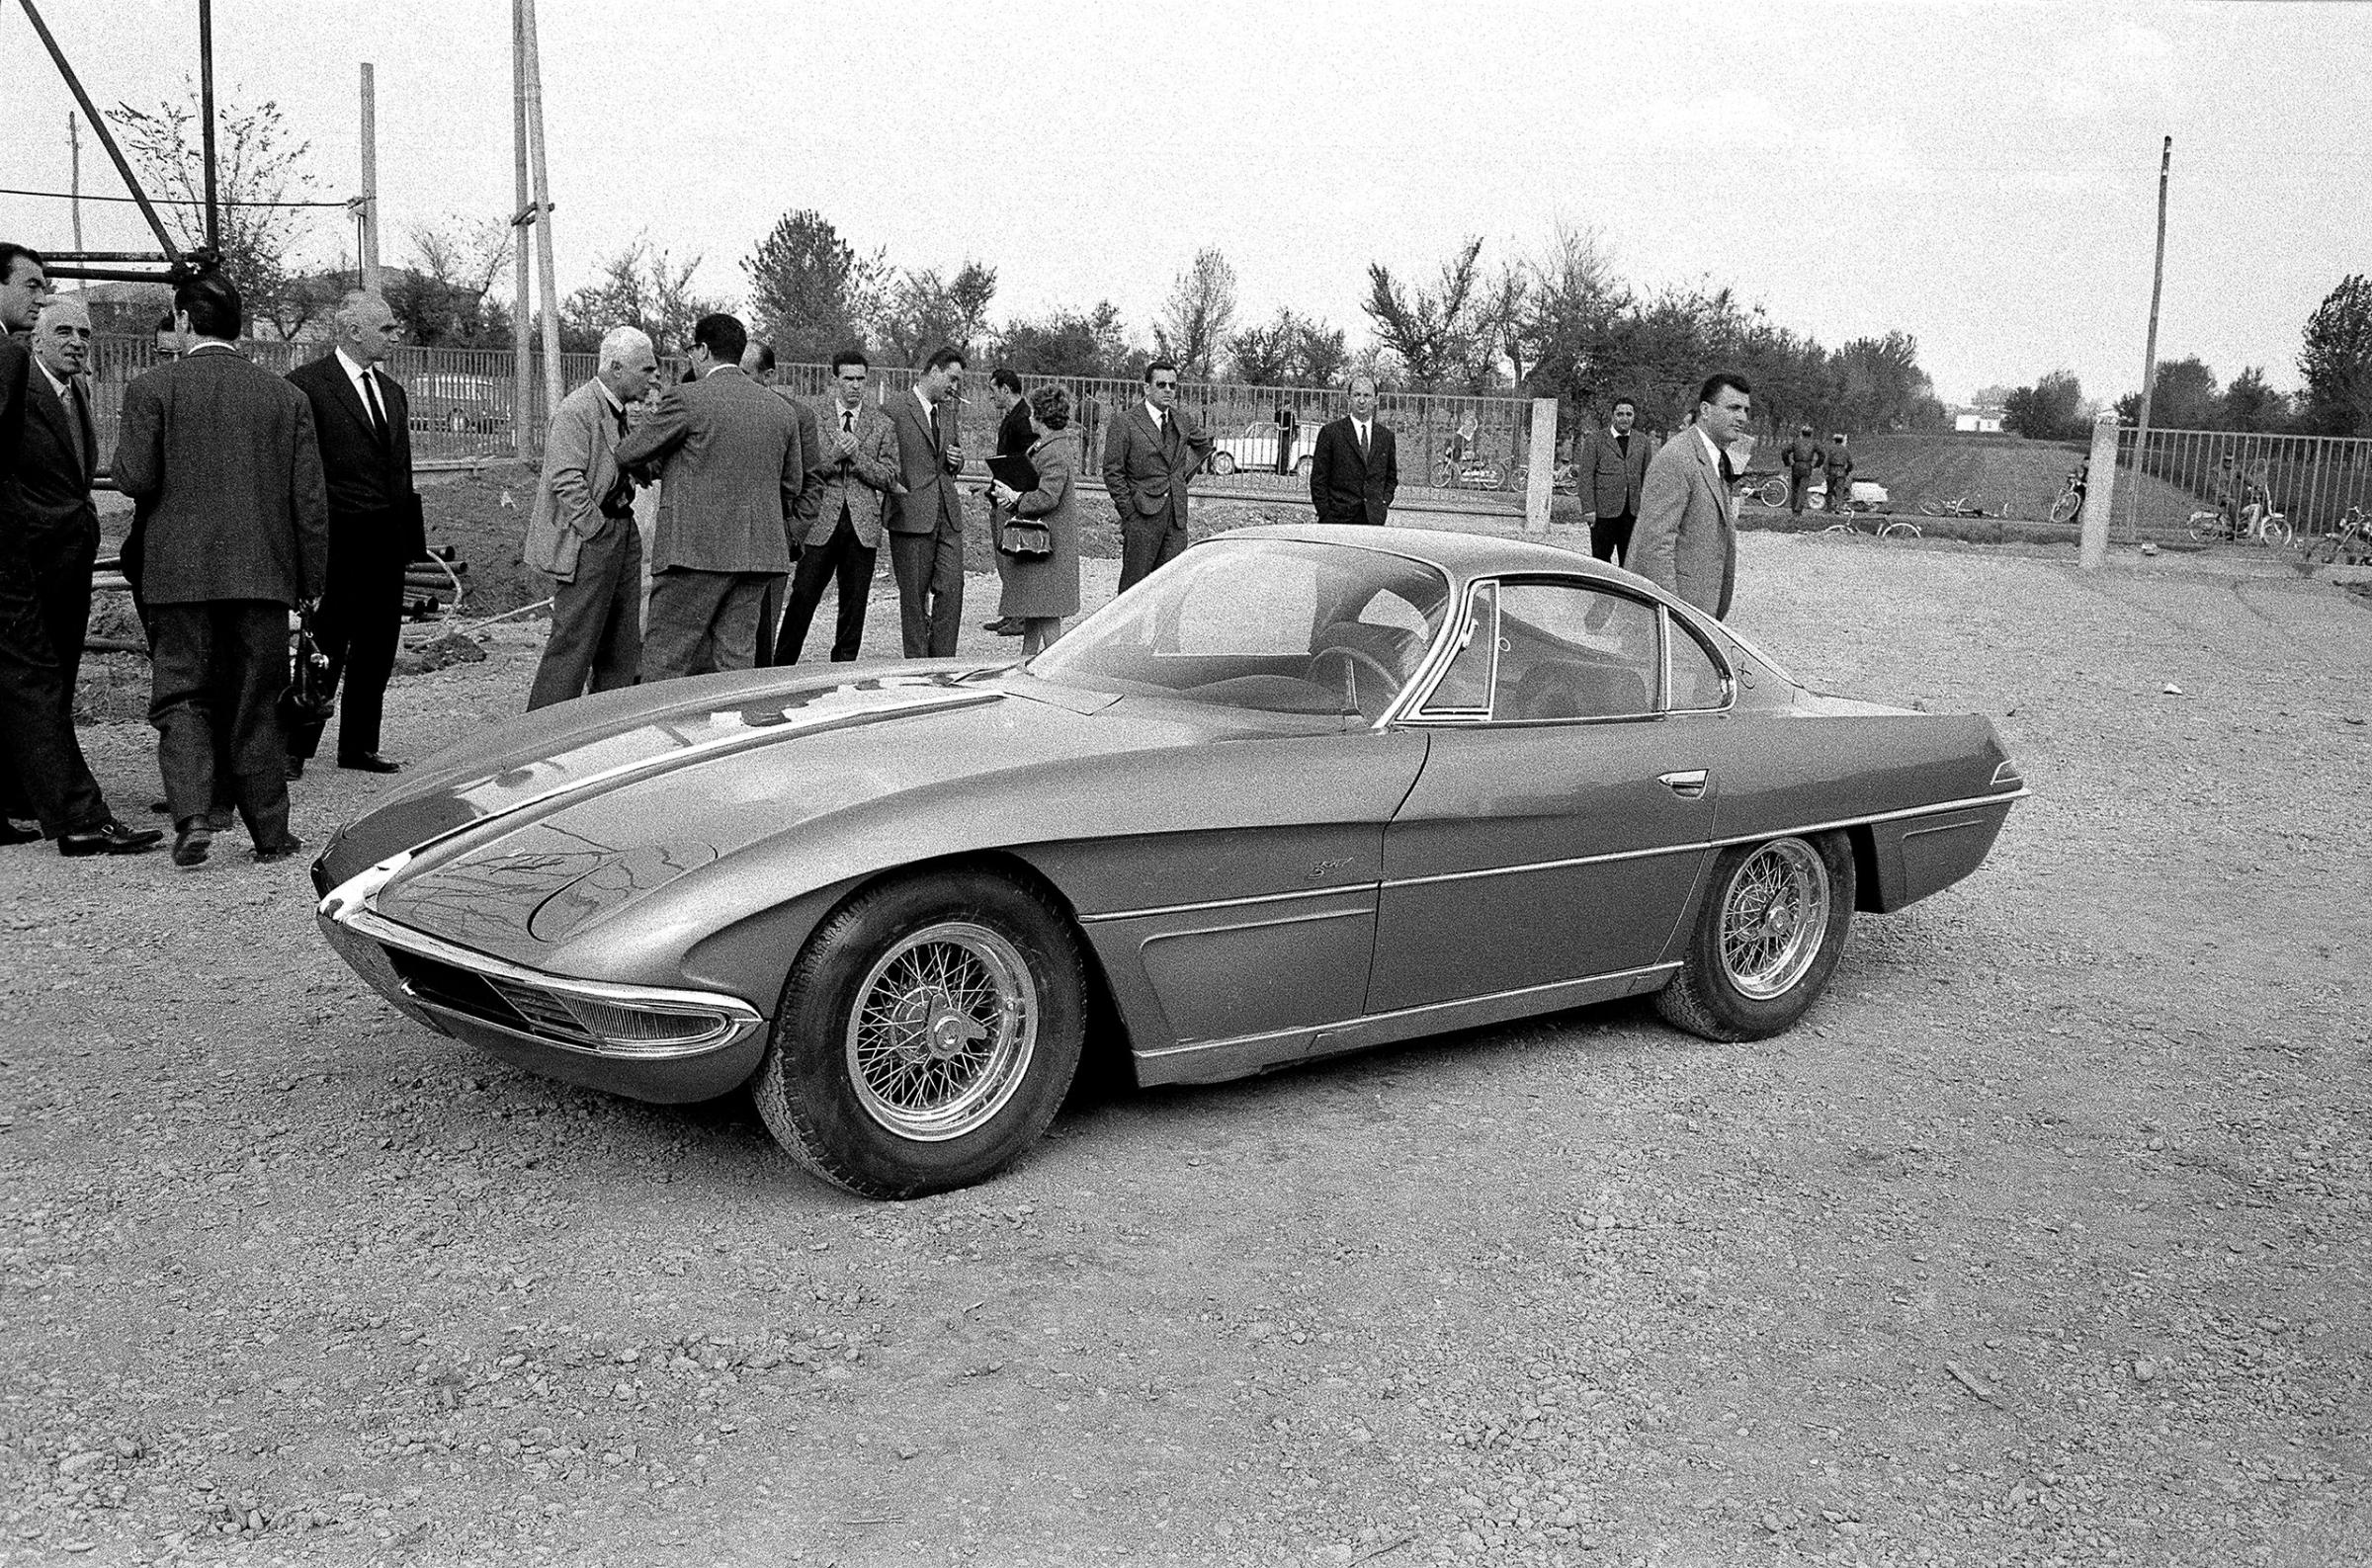 The launch of the new Lamborghini 350GTV with body by Franco Scaglione at the Lamborghini Factory, Sant'Agata, October 1963.